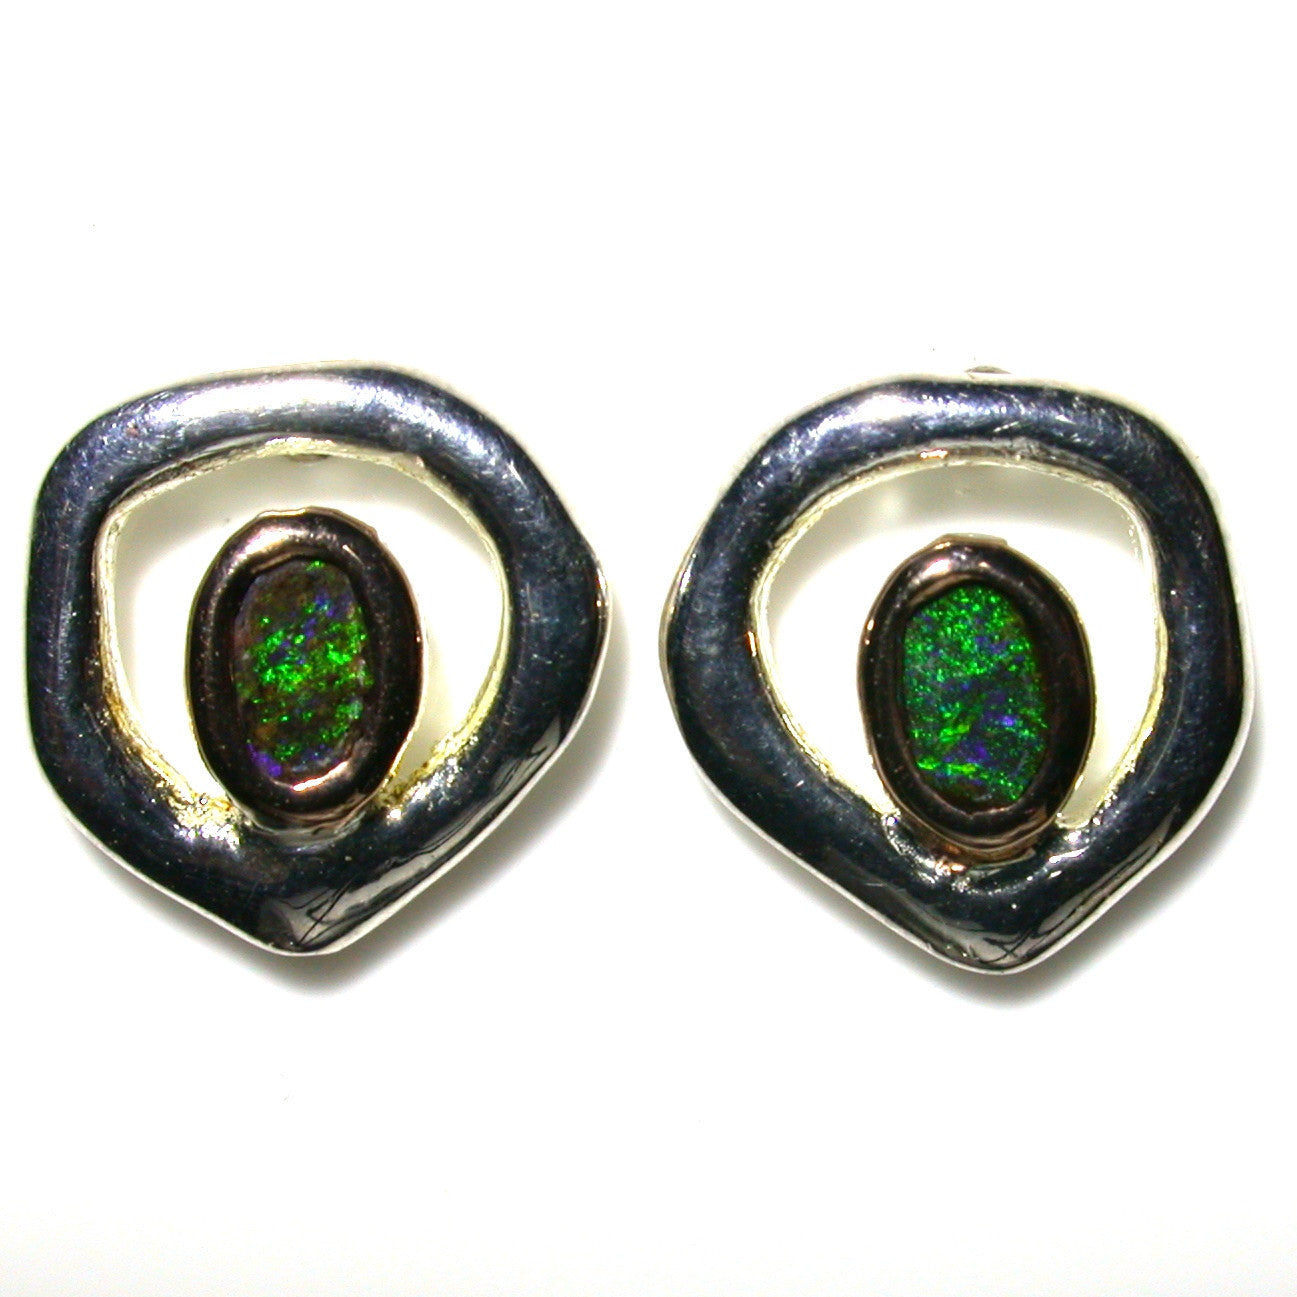 Green solid boulder opals set in sterling silver stud earrings